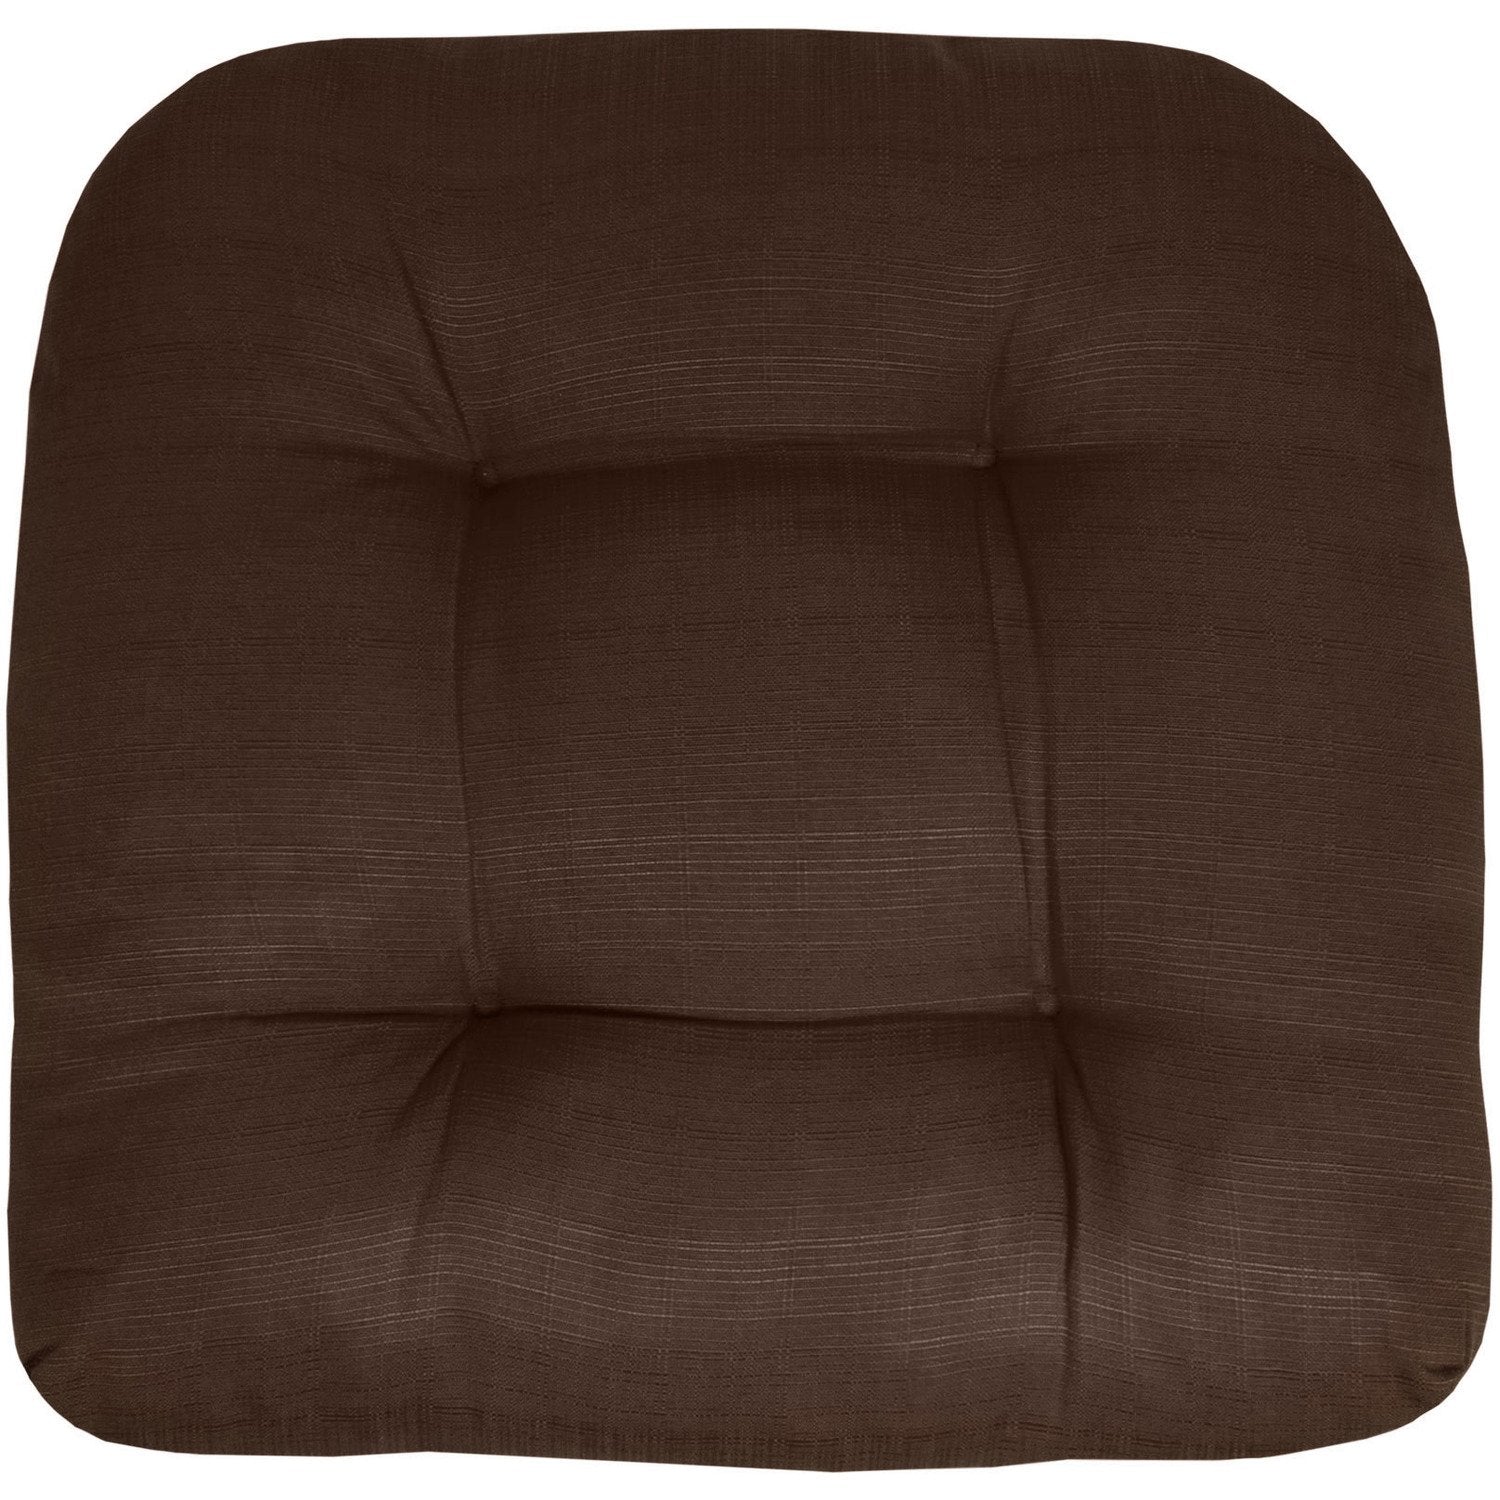 Patio Seat Cushion Set Chocolate - Top